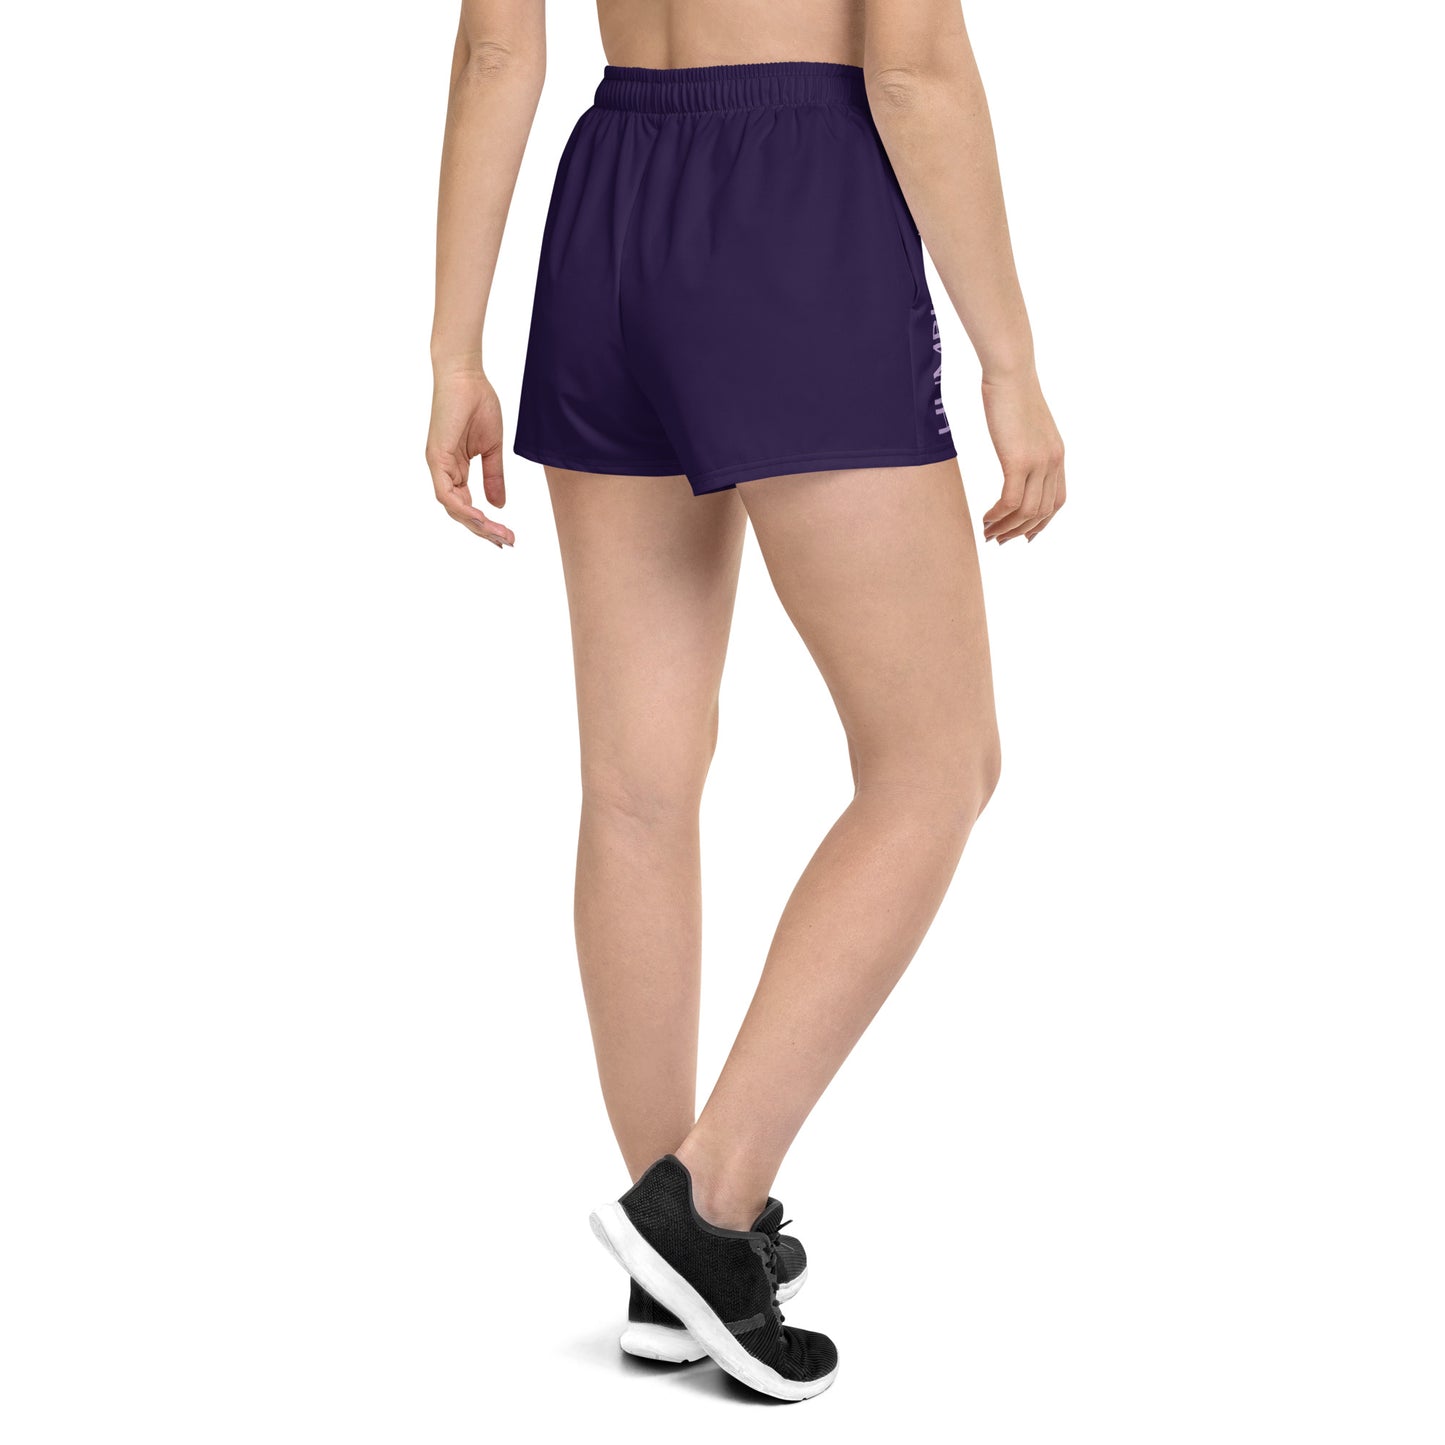 Humble Sportswear, women’s color match shorts, women’s bottoms, moisture-wicking shorts for women